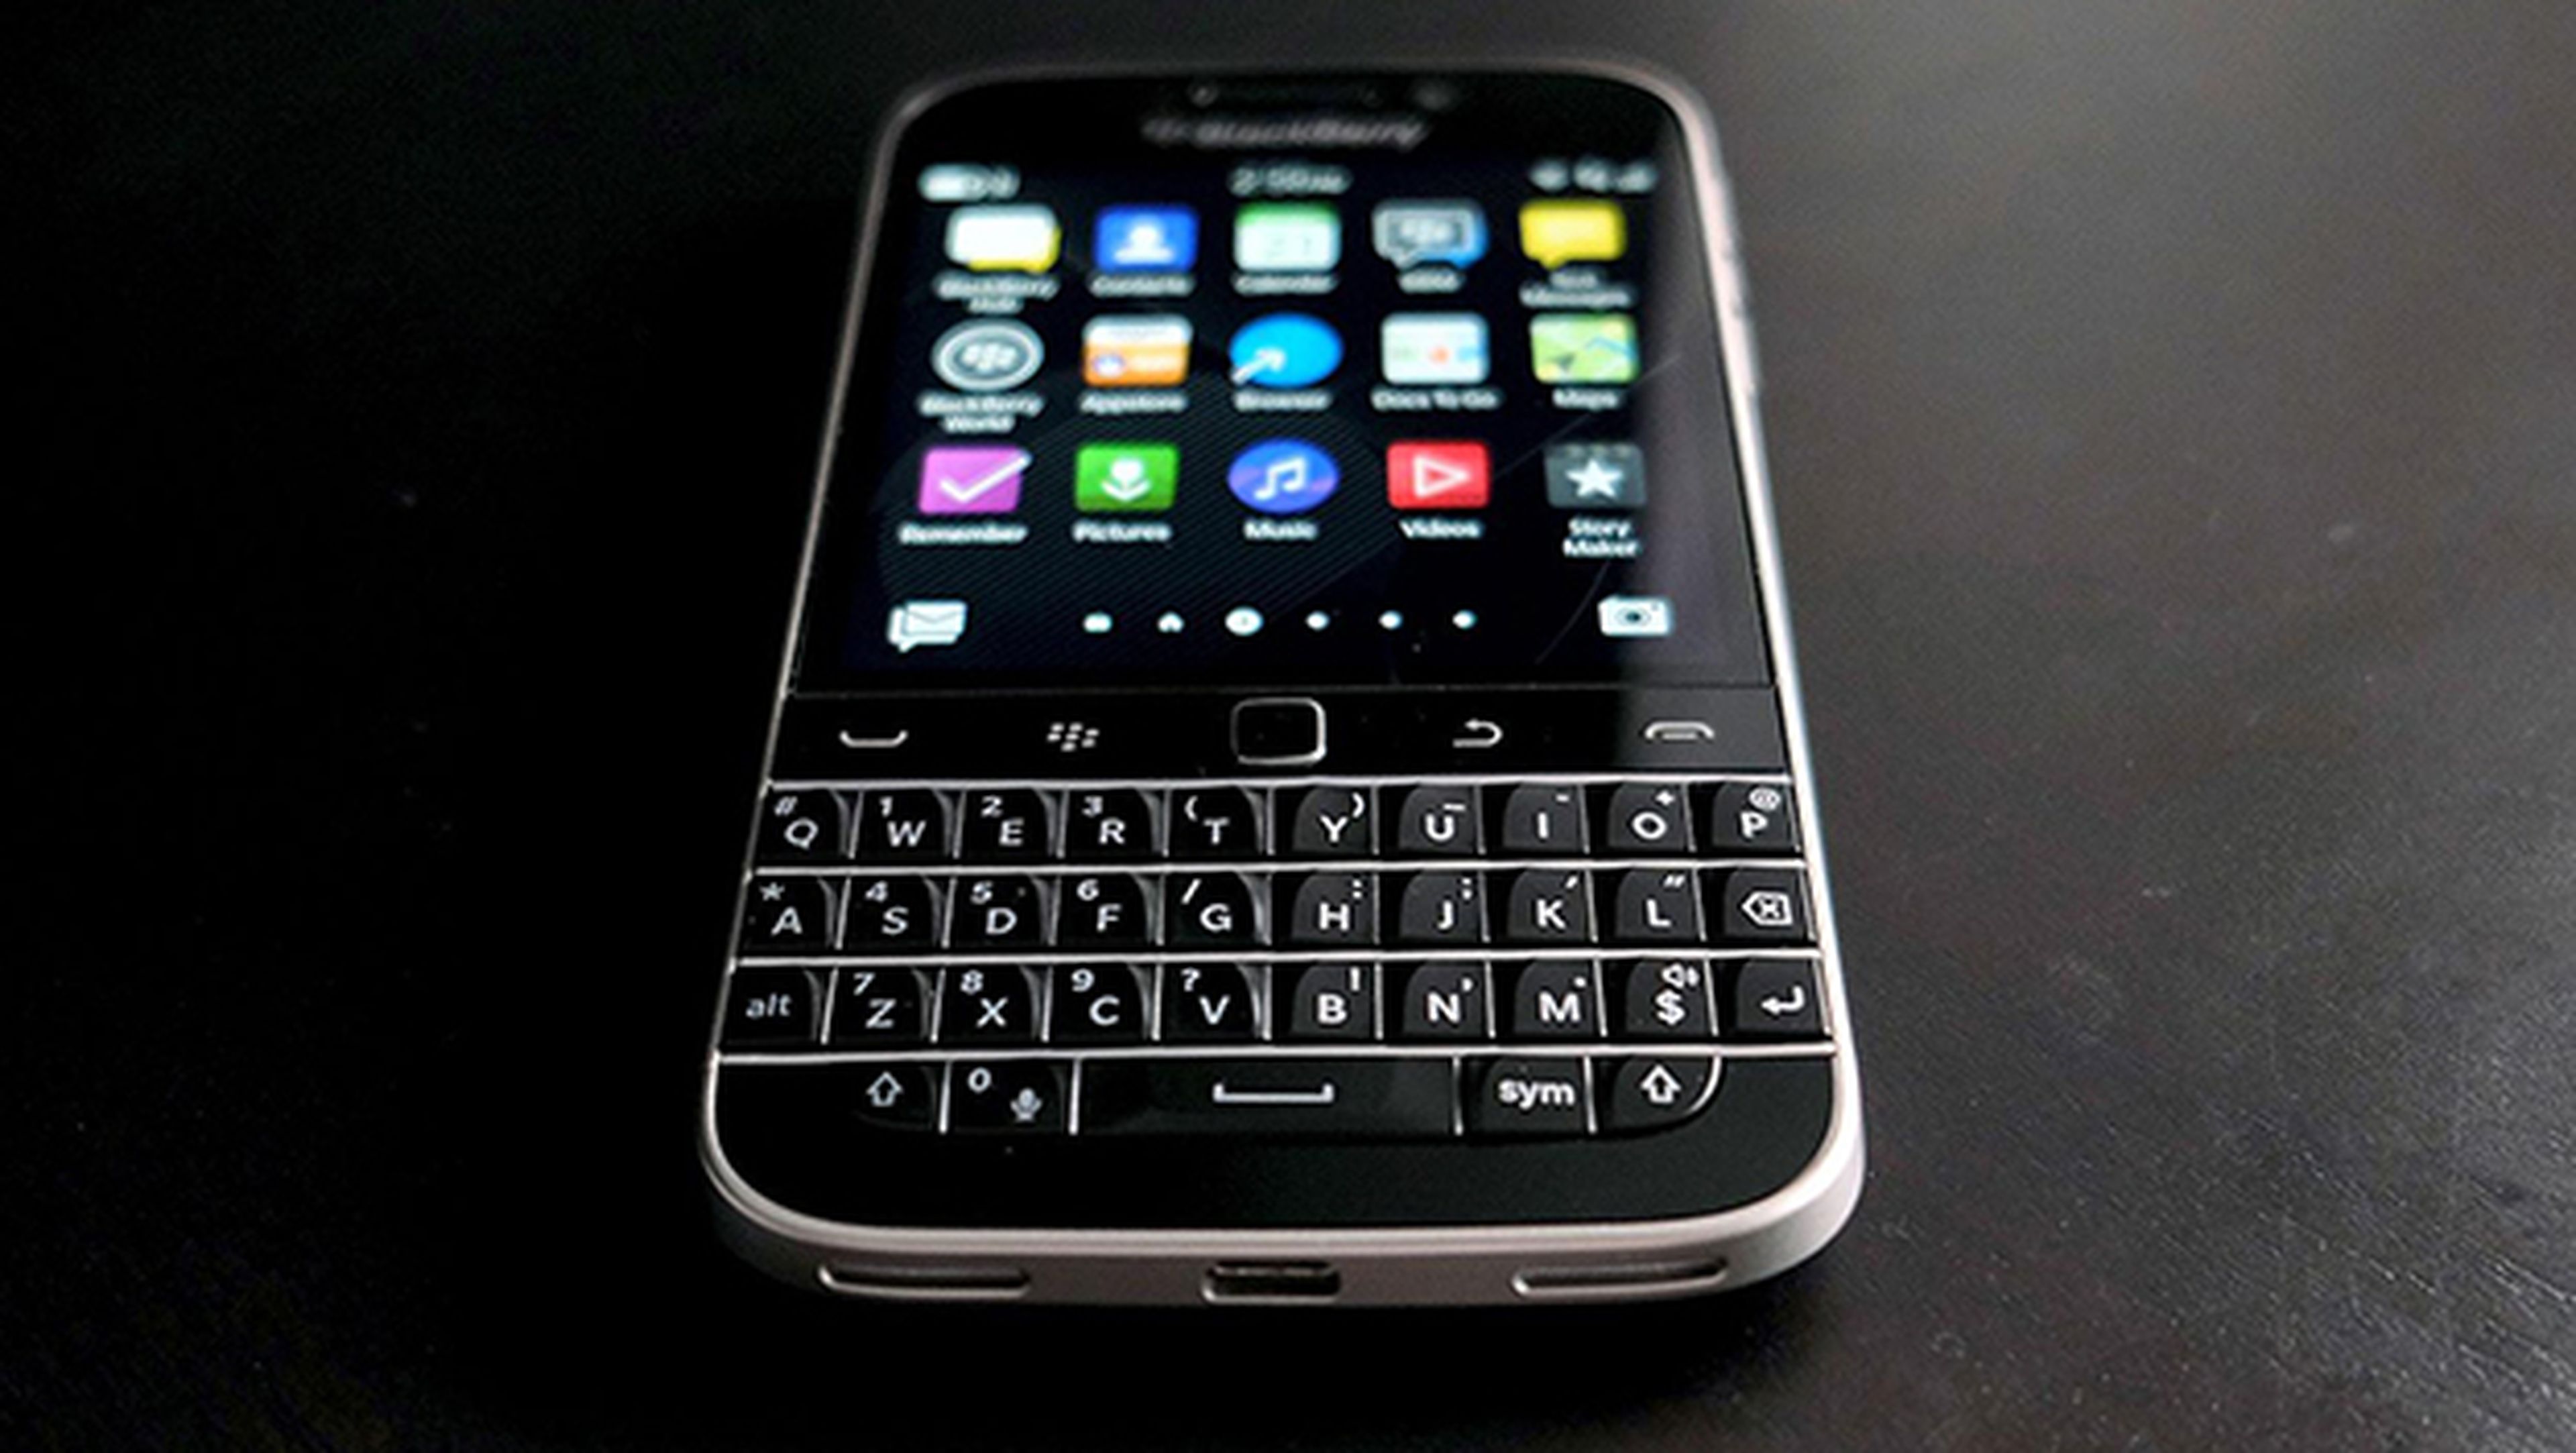 Se descubre un misterioso nuevo teléfono de Blackberry